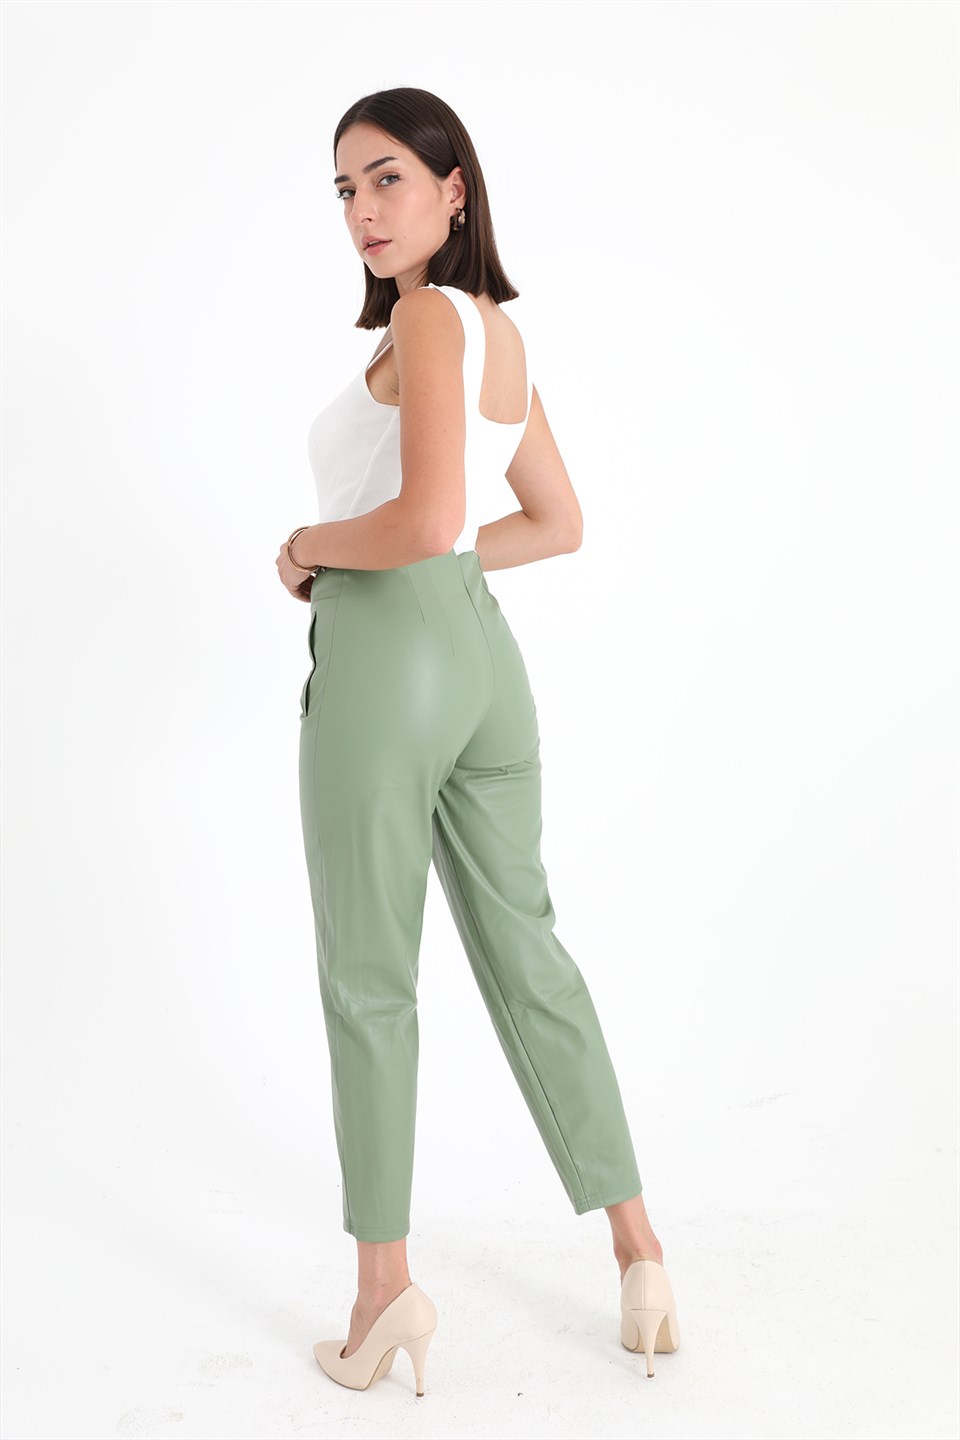 Women's Pleated High Waist Leather Trousers - Mint Green - STREET MODE ™